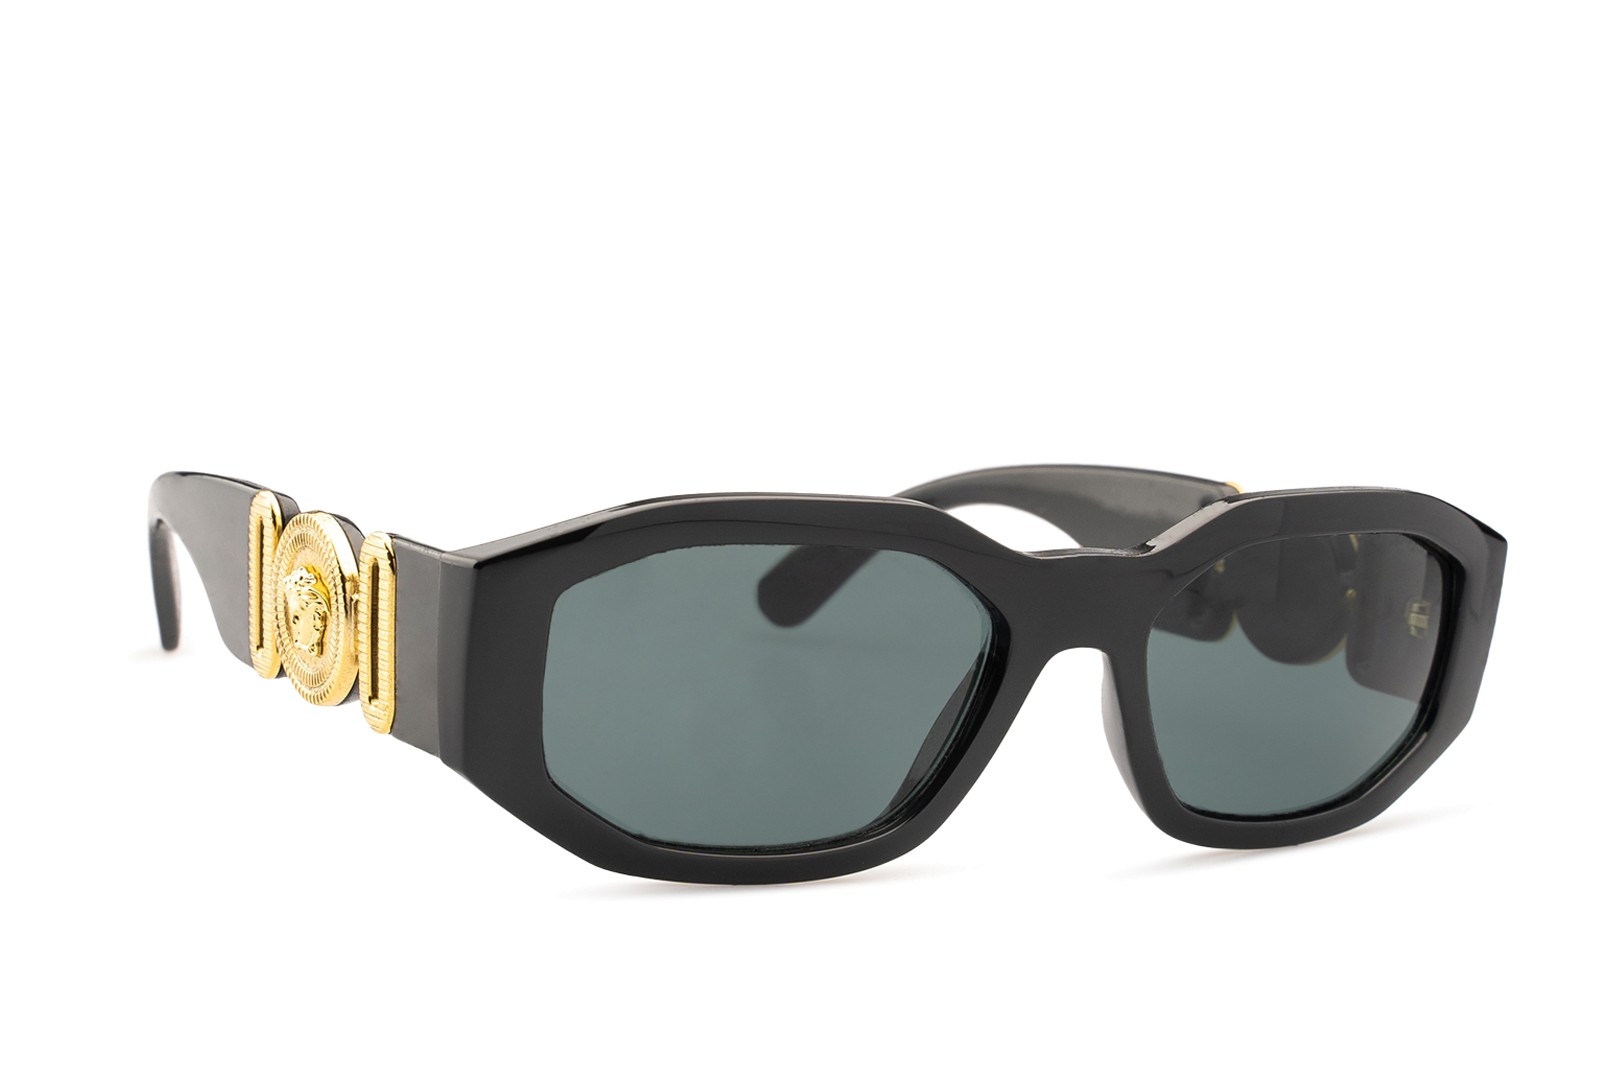  Versace Gafas de sol unisex montura negra, lentes gris